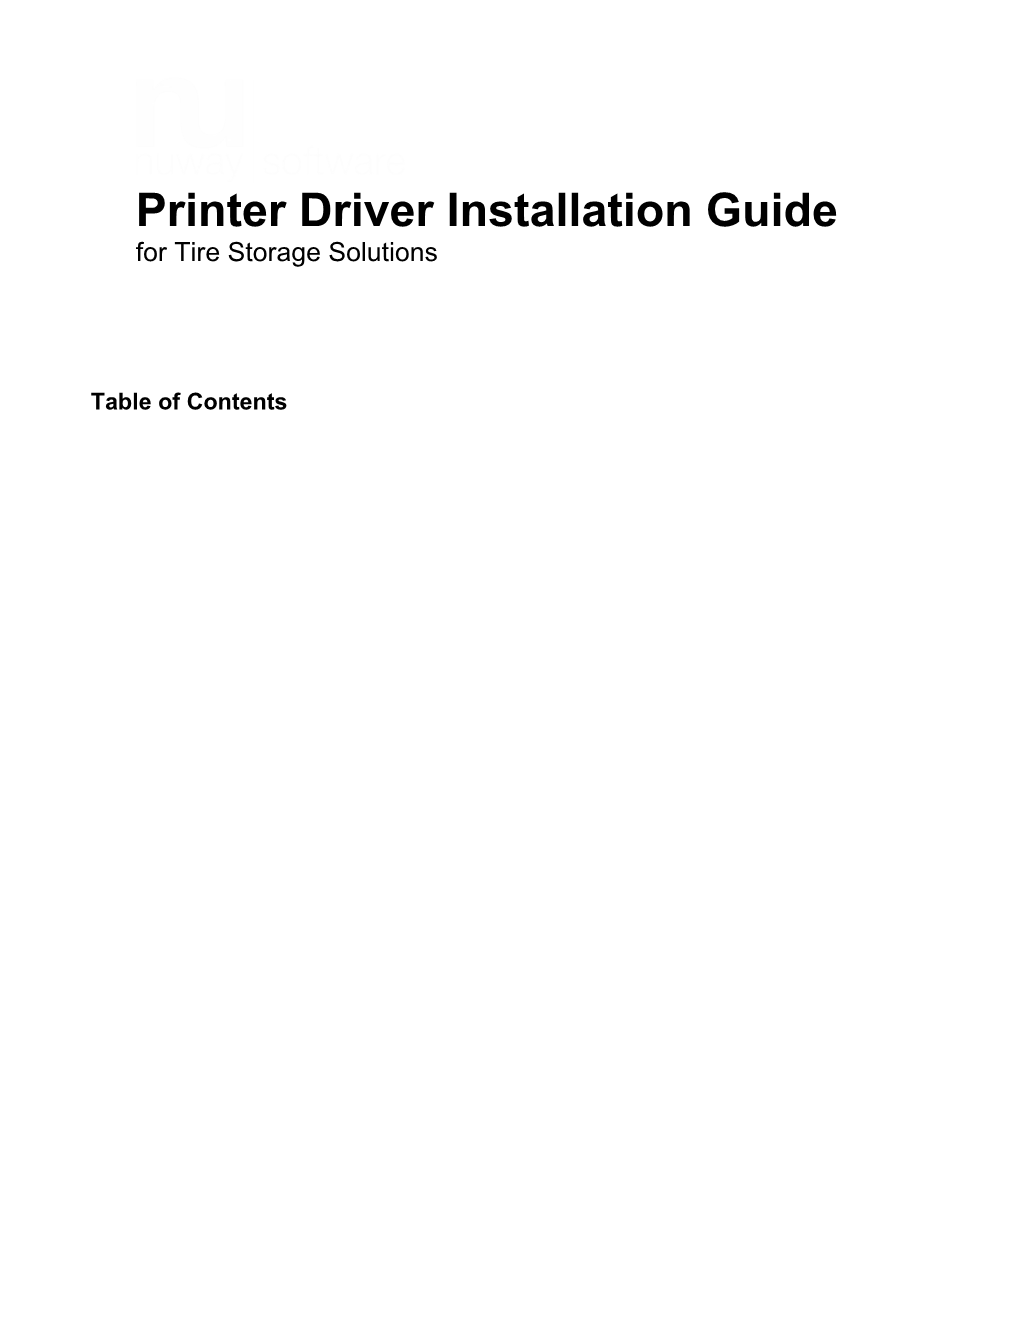 3.0 Install Intermec Printer Driver